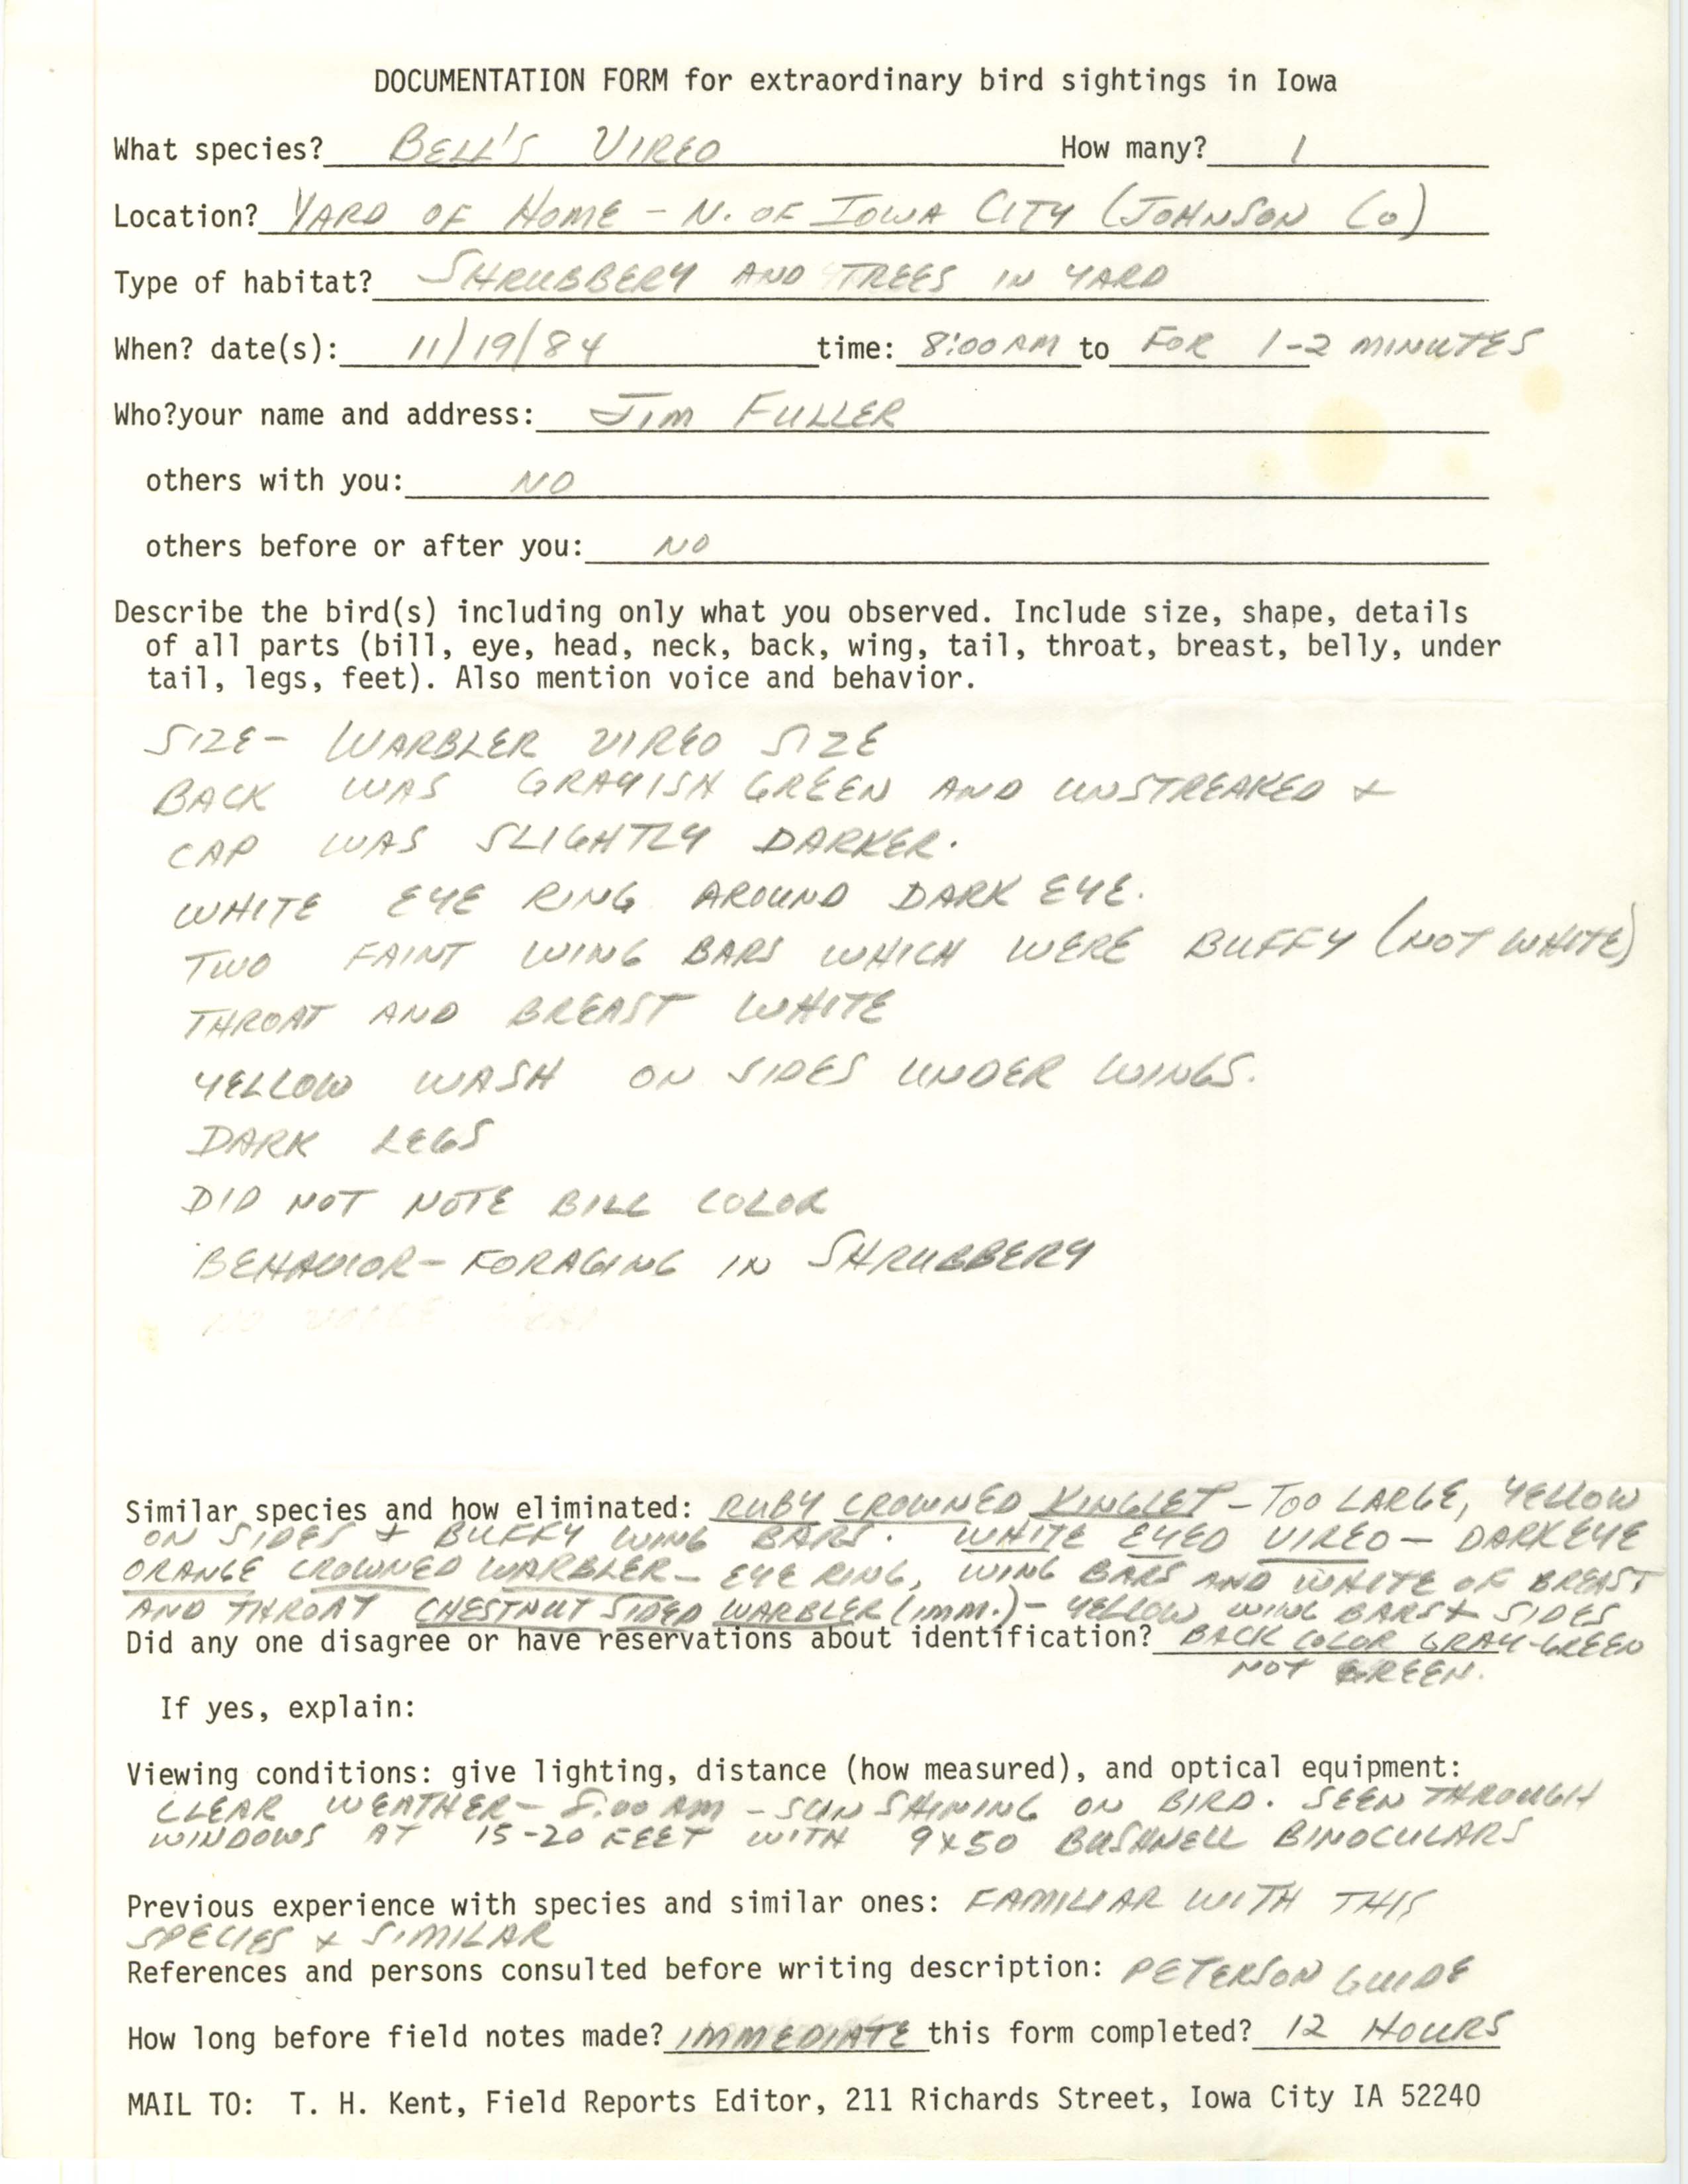 Rare bird documentation form for Bell's Vireo north of Iowa City, 1984